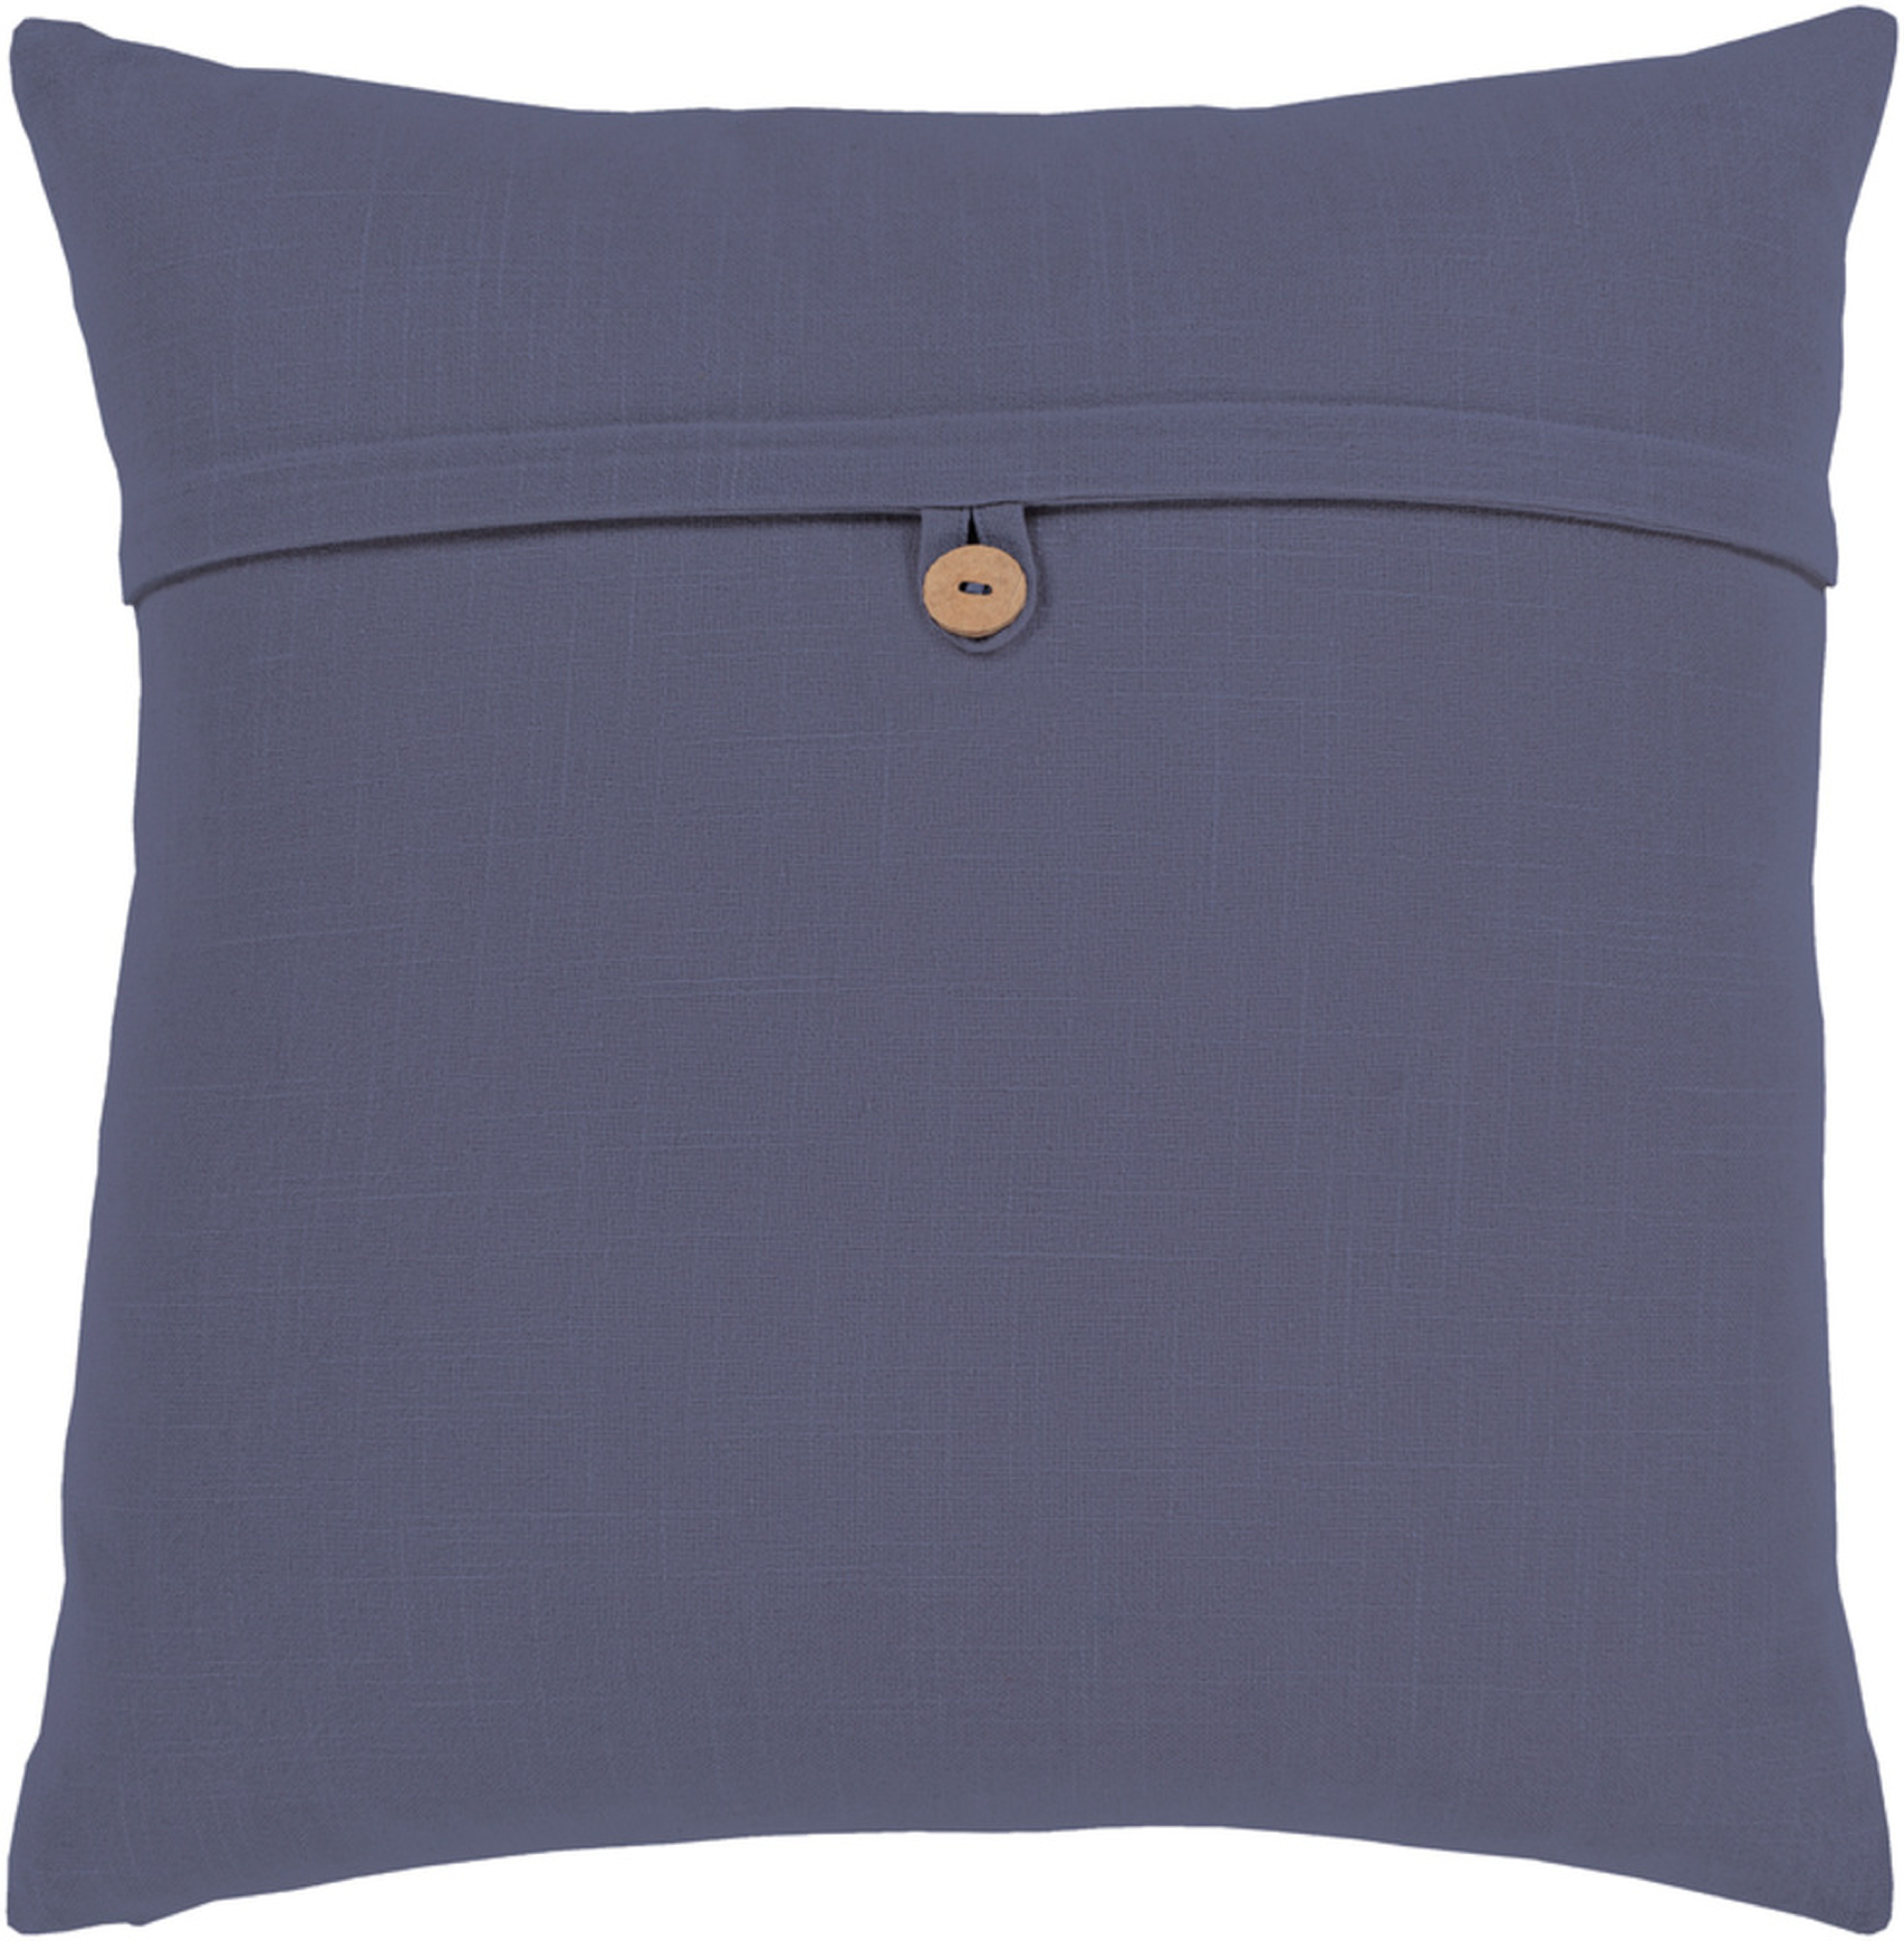 Perine Pillow, 18" x 18", Navy - Cove Goods